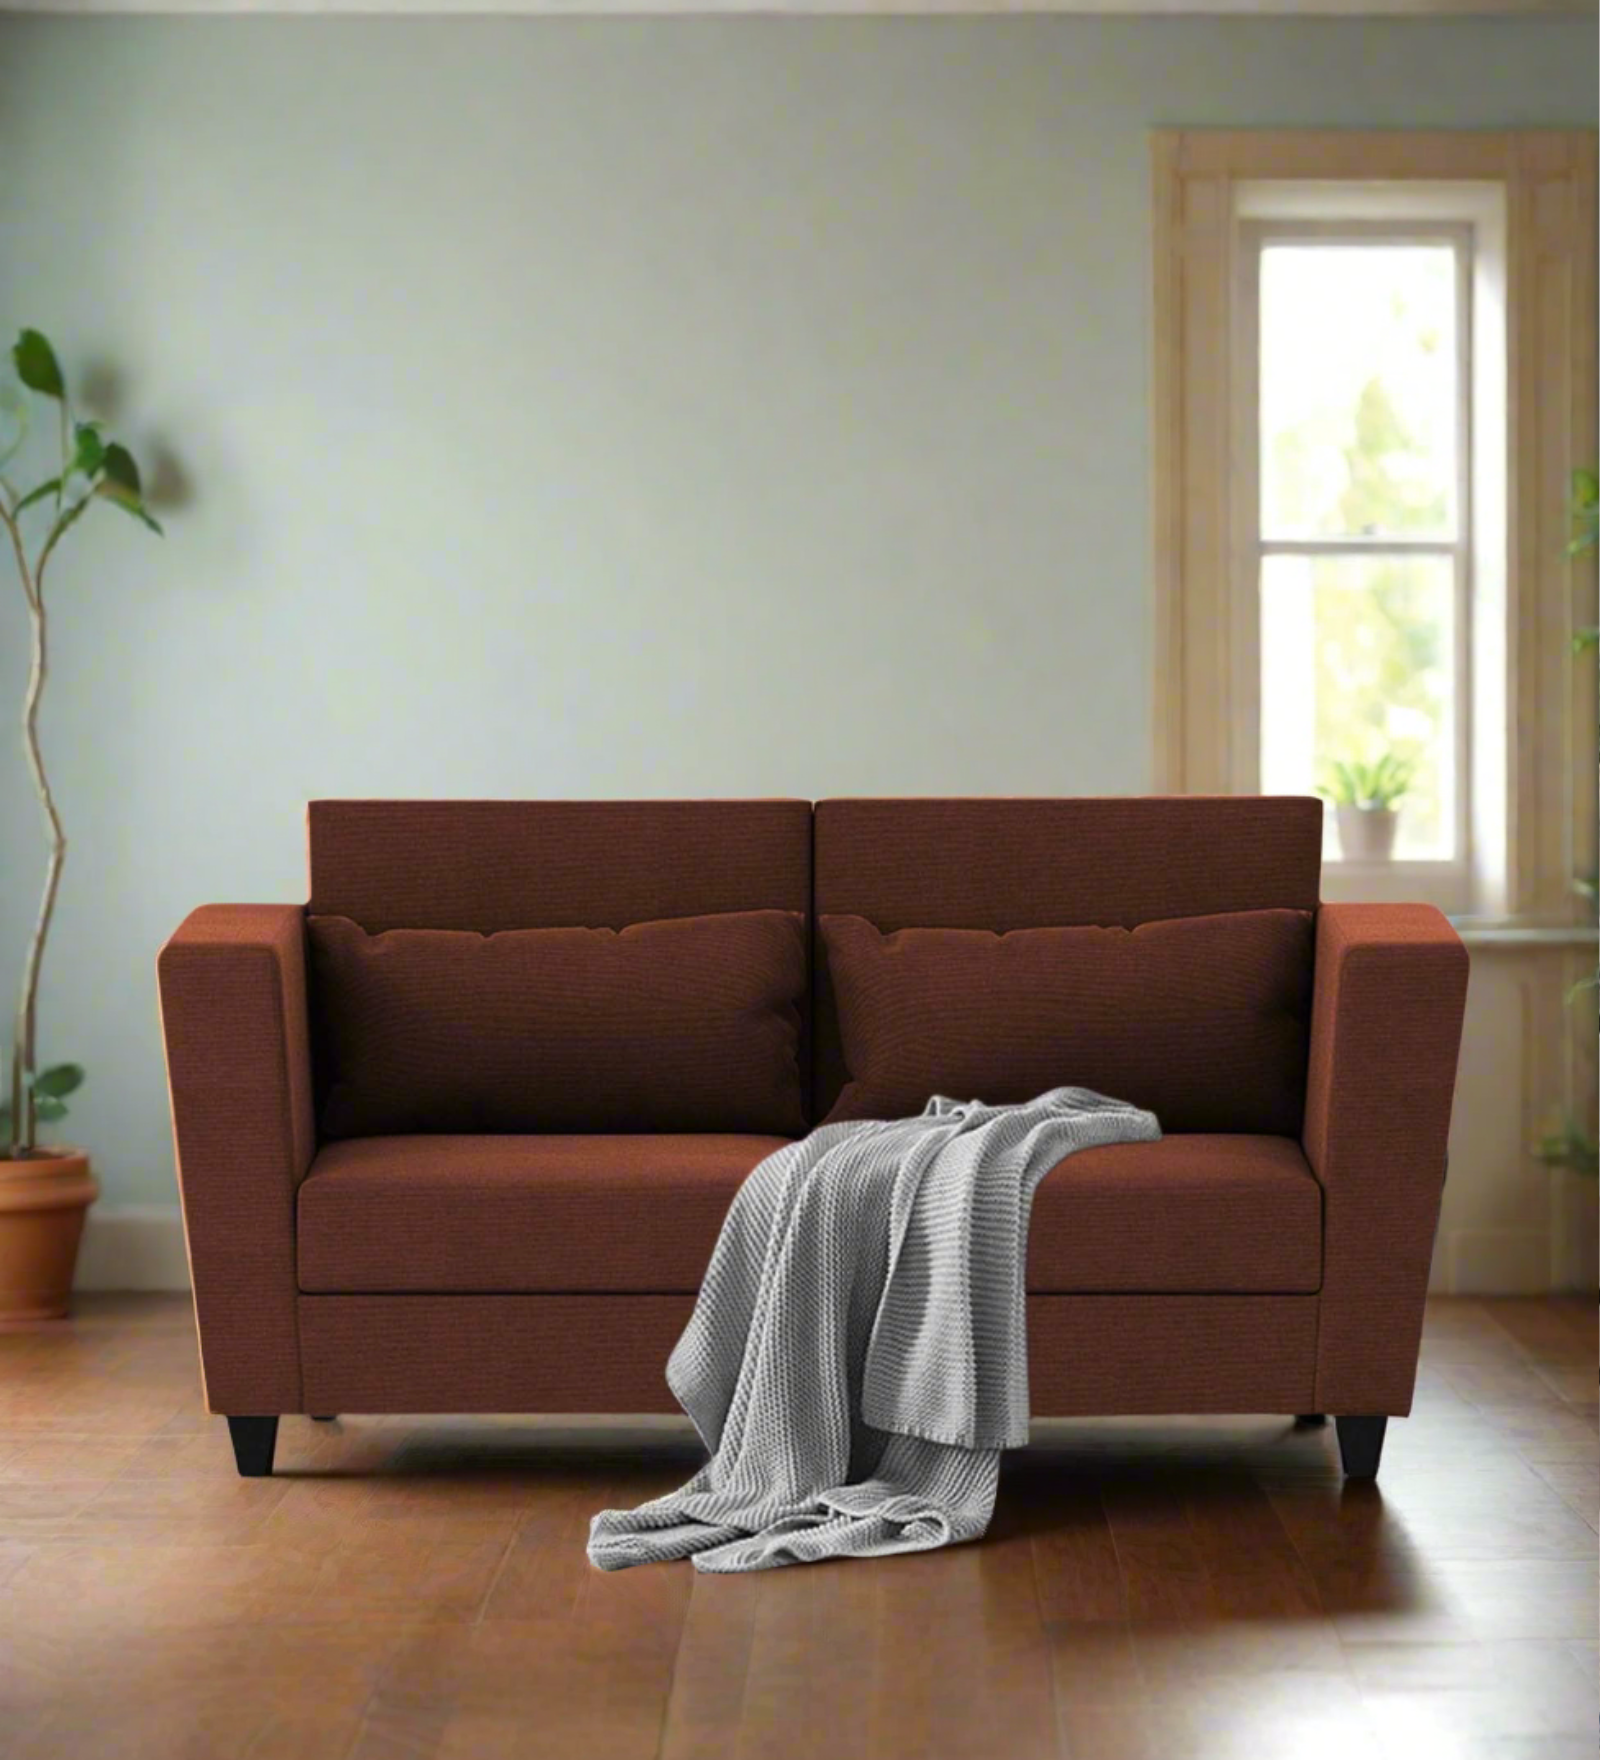 Tokyo Fabric 2 Seater Sofa in Coffee Brown Colour